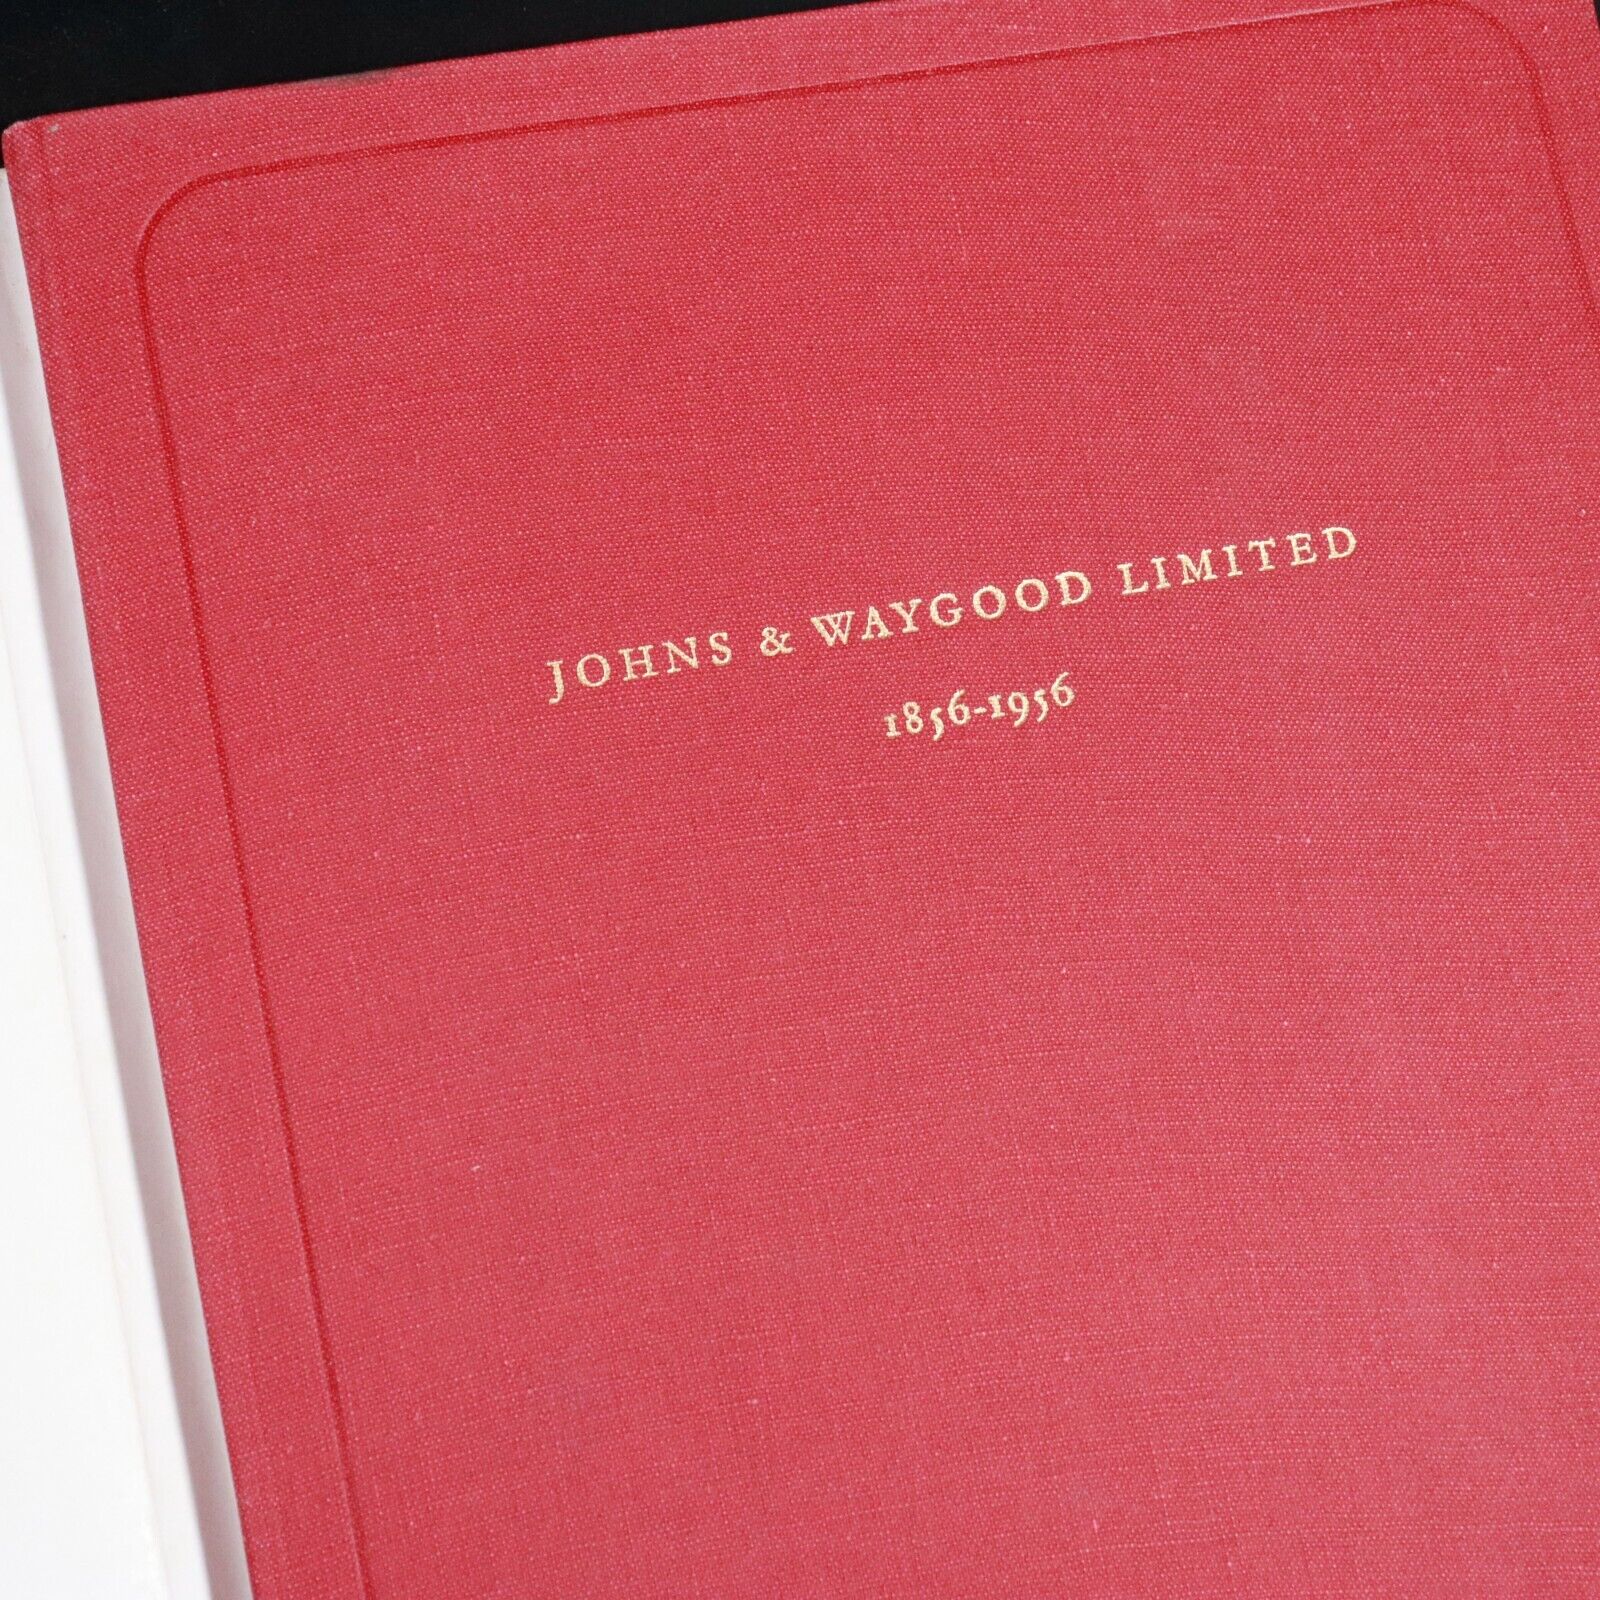 1956 Johns & Waygood Limited 1856-1956 Geoffrey Blainey Australian History Book - 0